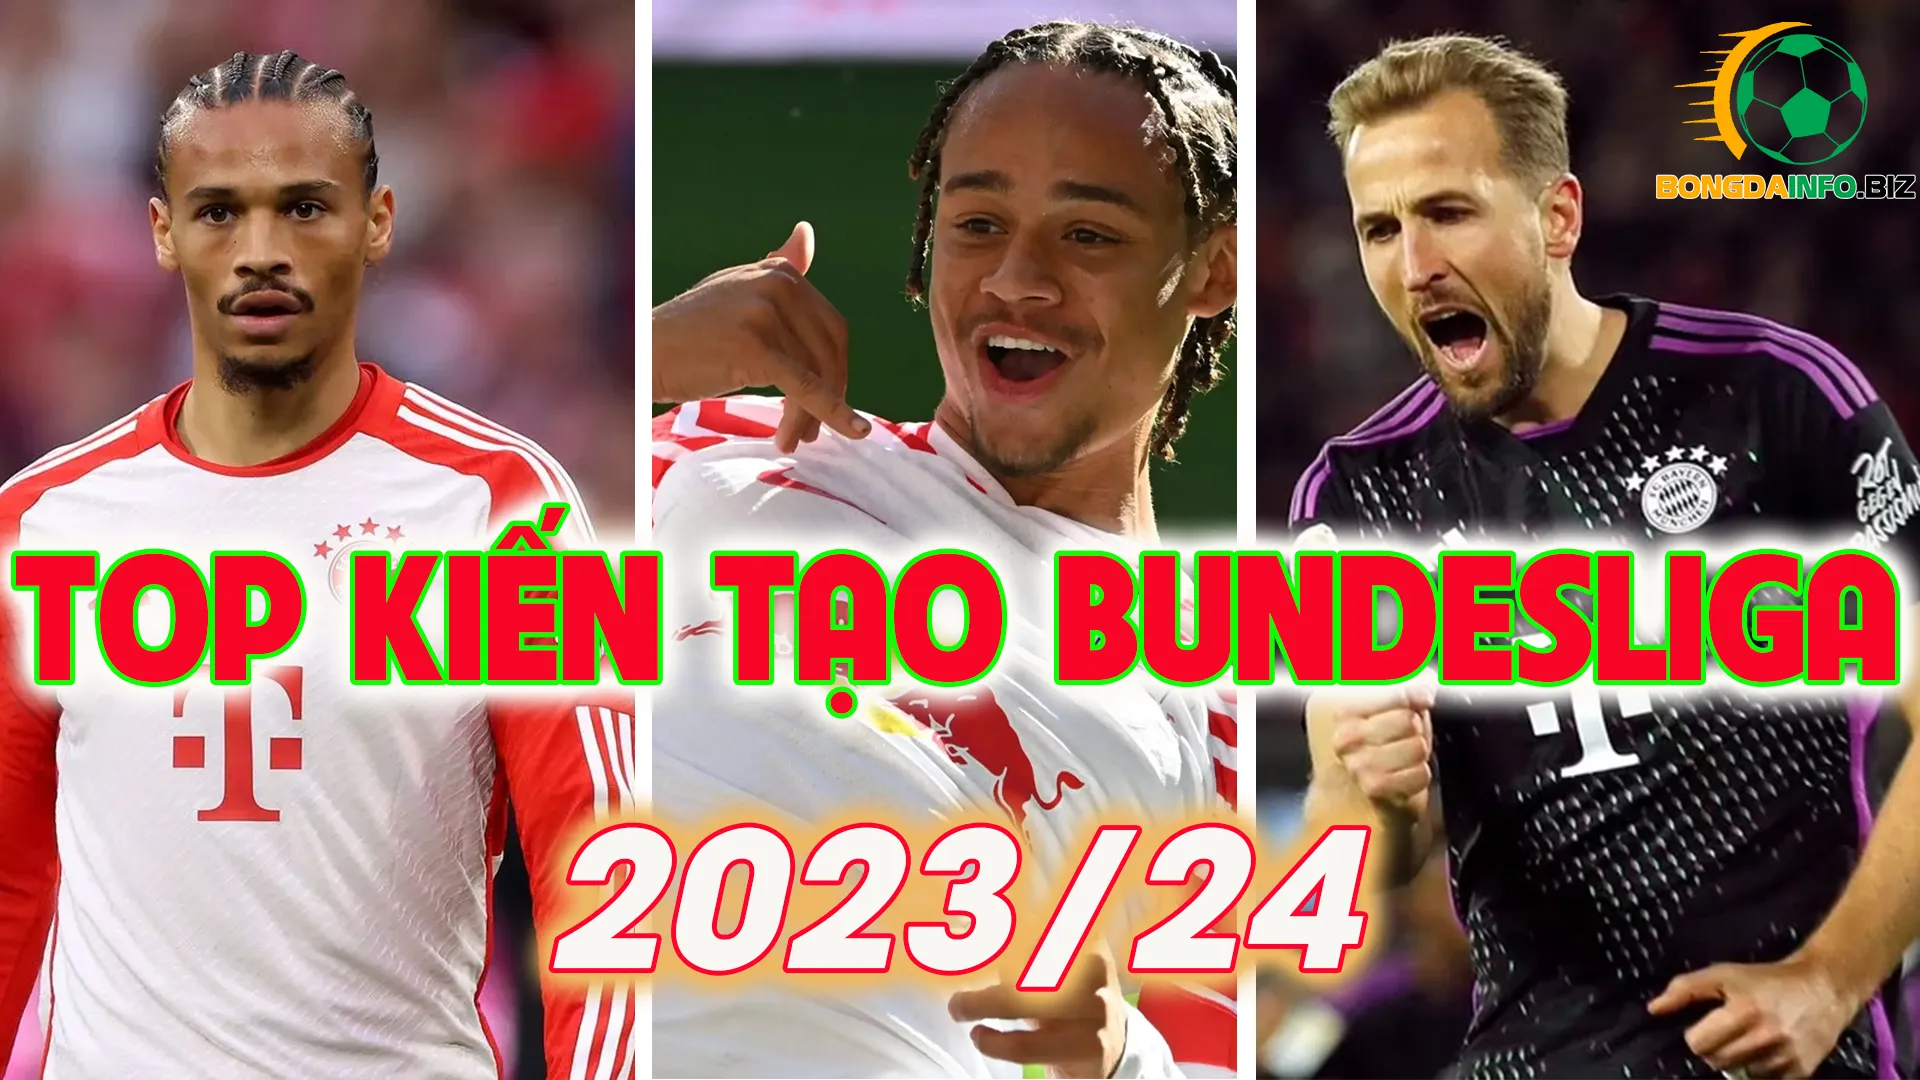 Top kiến tạo Bundesliga 2023/24 - Vua kiến tạo Bundesliga